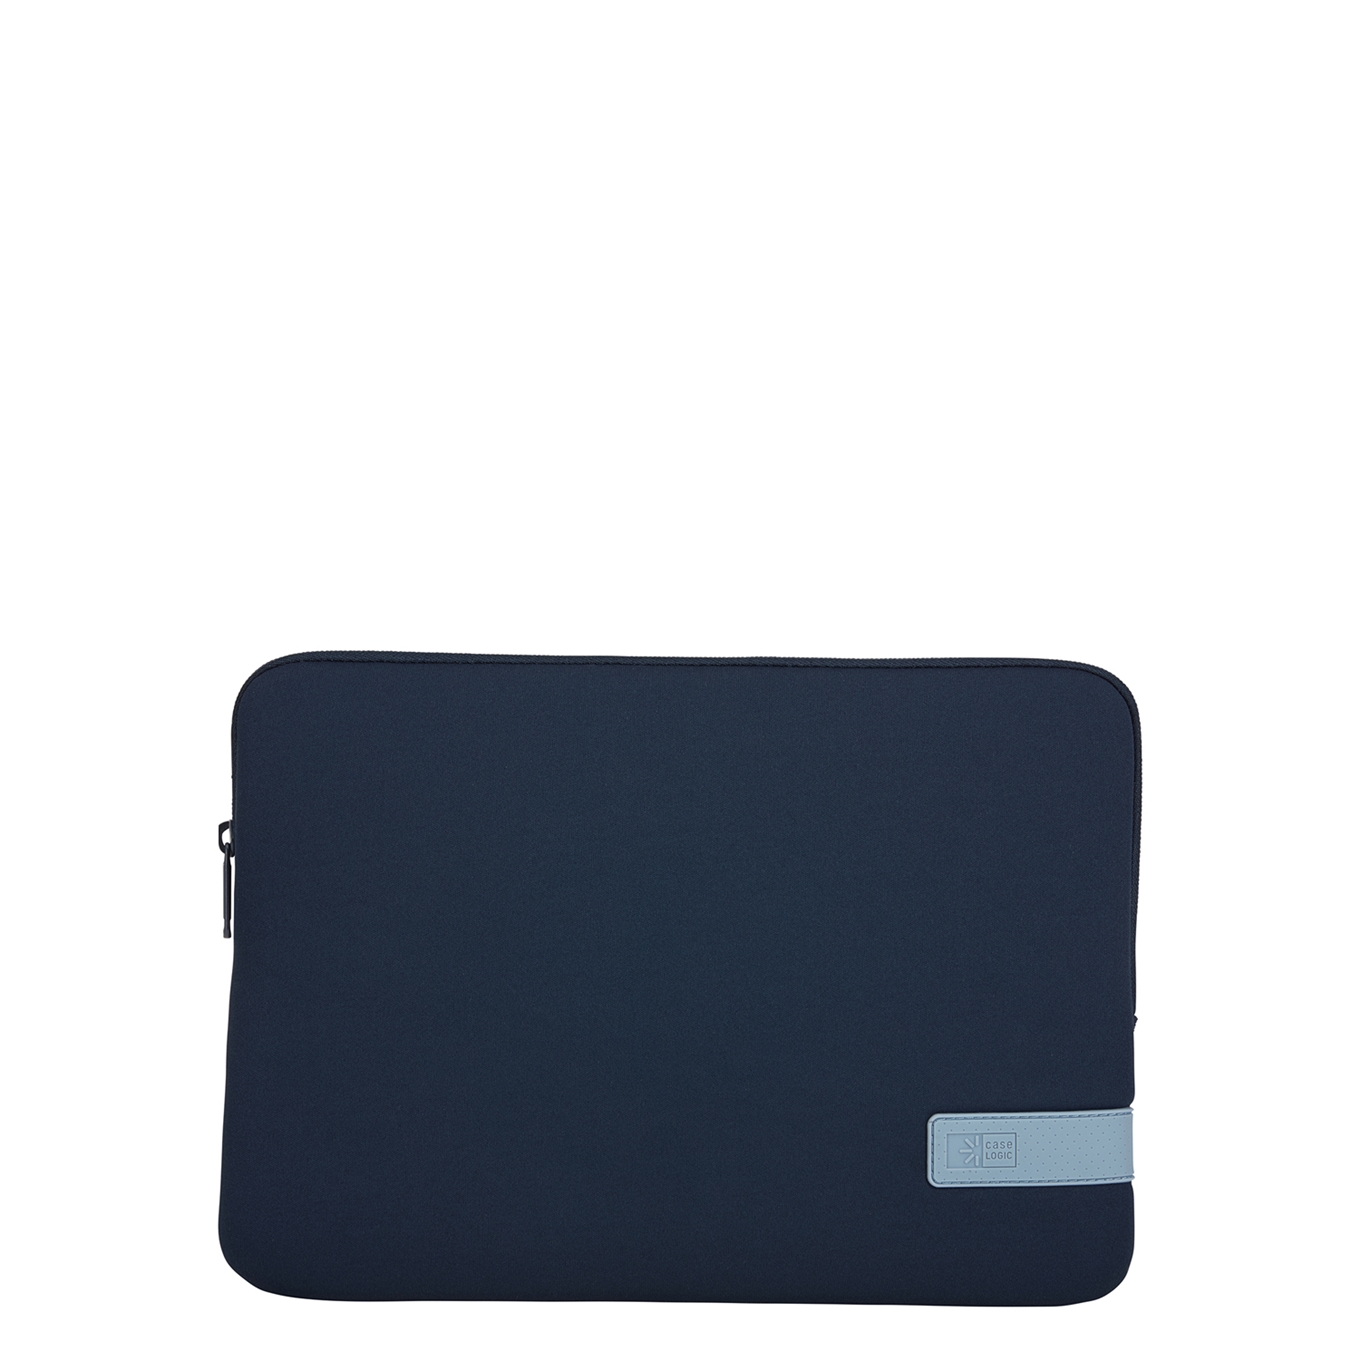 Case Logic Reflect MacBook Sleeve 13 inch Blauw